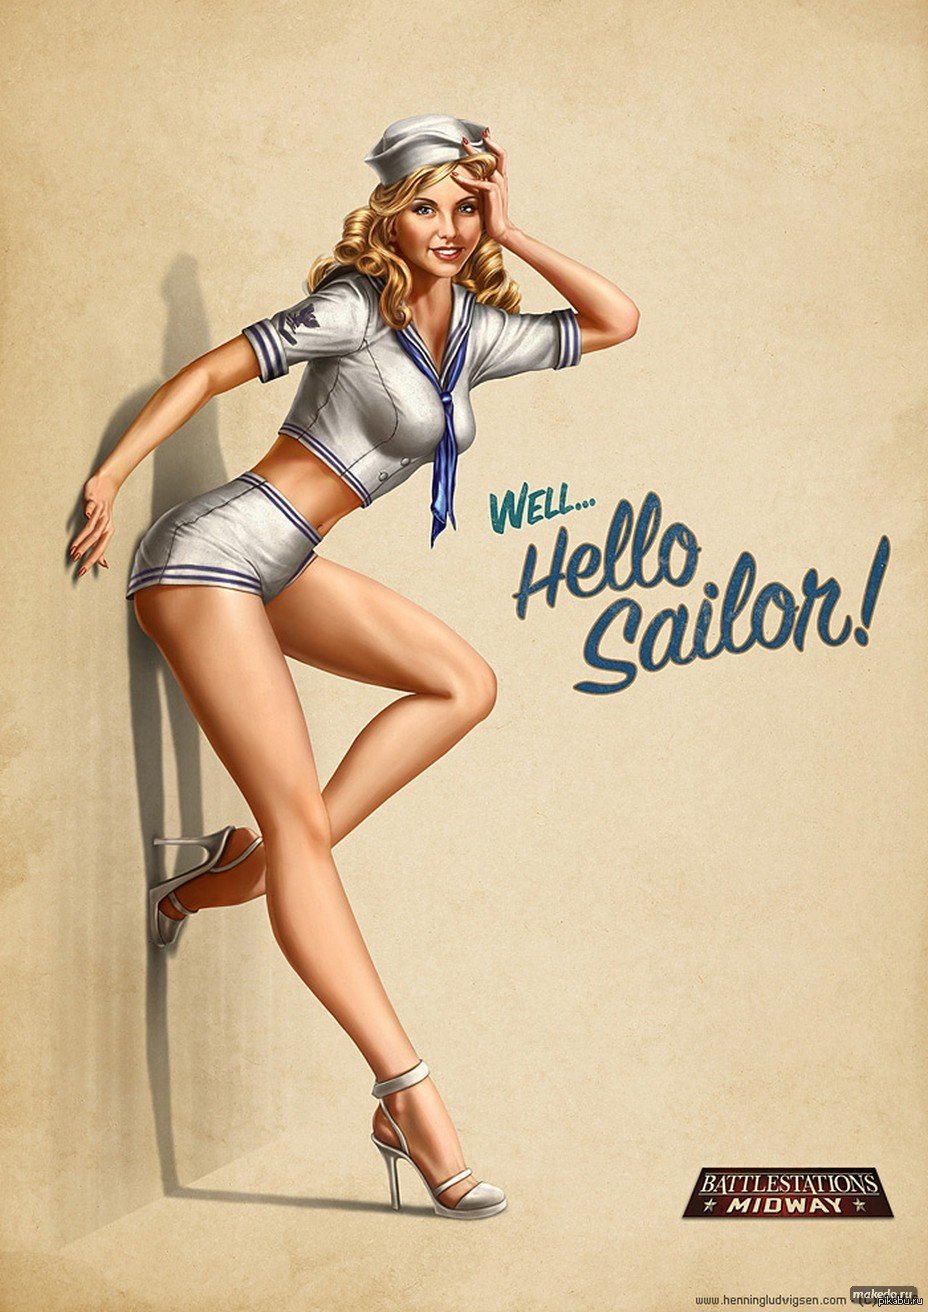 Сайт пин ап pin up bonus space. Пин ап девушки морячки. Рисунки в стиле пин ап. Американские плакаты с девушками. Девушки в стиле пин ап.